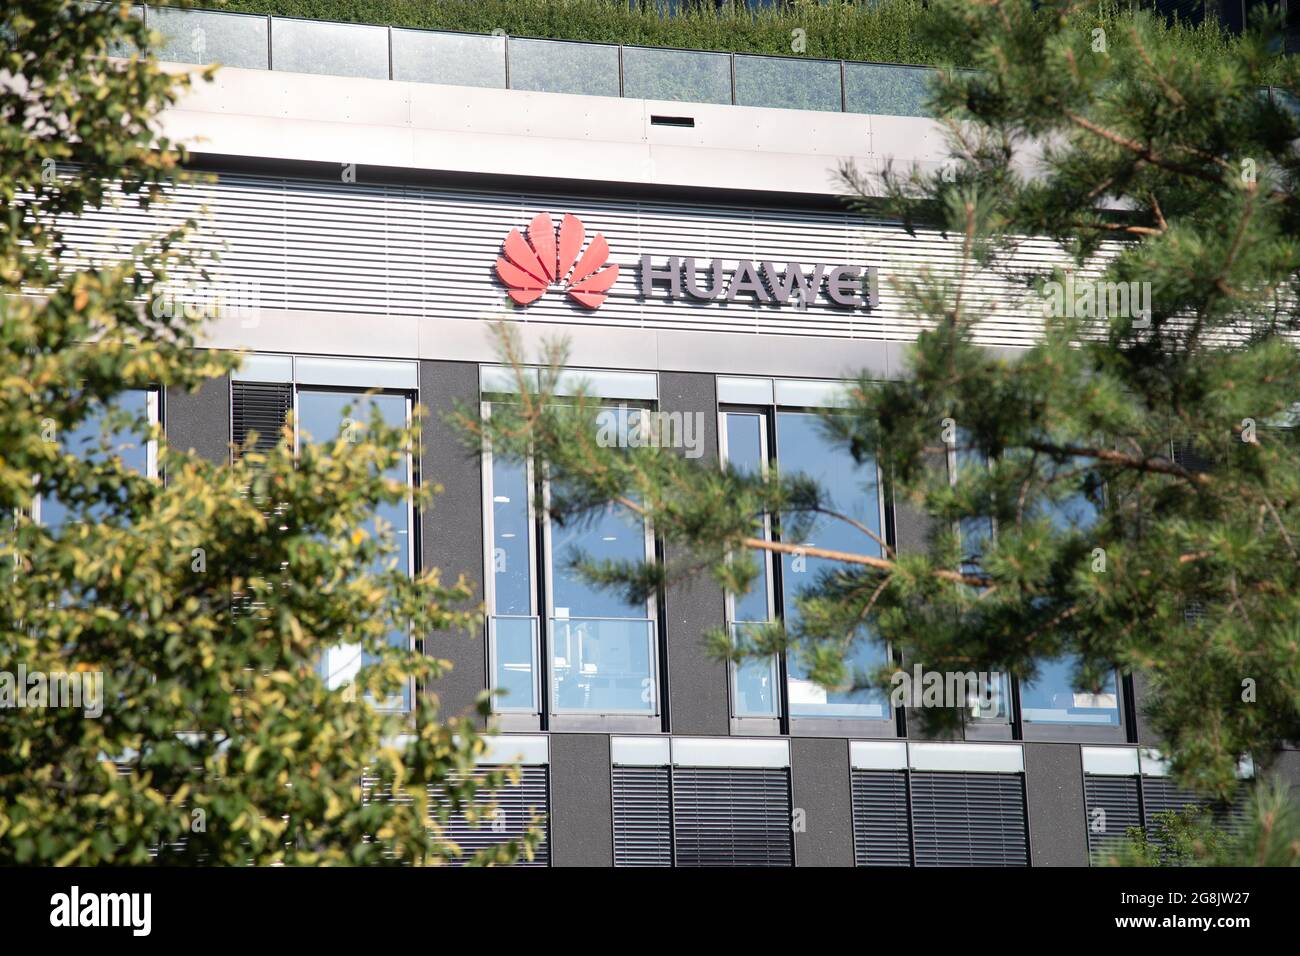 Büros vom größten smartphone Hersteller der Welt Huawei technologies Co. Ltd. À München. Huawei steht wegen der Nähe zum chinesischen Staat und der Partei in der Kritik. -- bureaux de Huawei vus à Munich. (Photo par Alexander Pohl/Sipa USA) crédit: SIPA USA/Alay Live News Banque D'Images